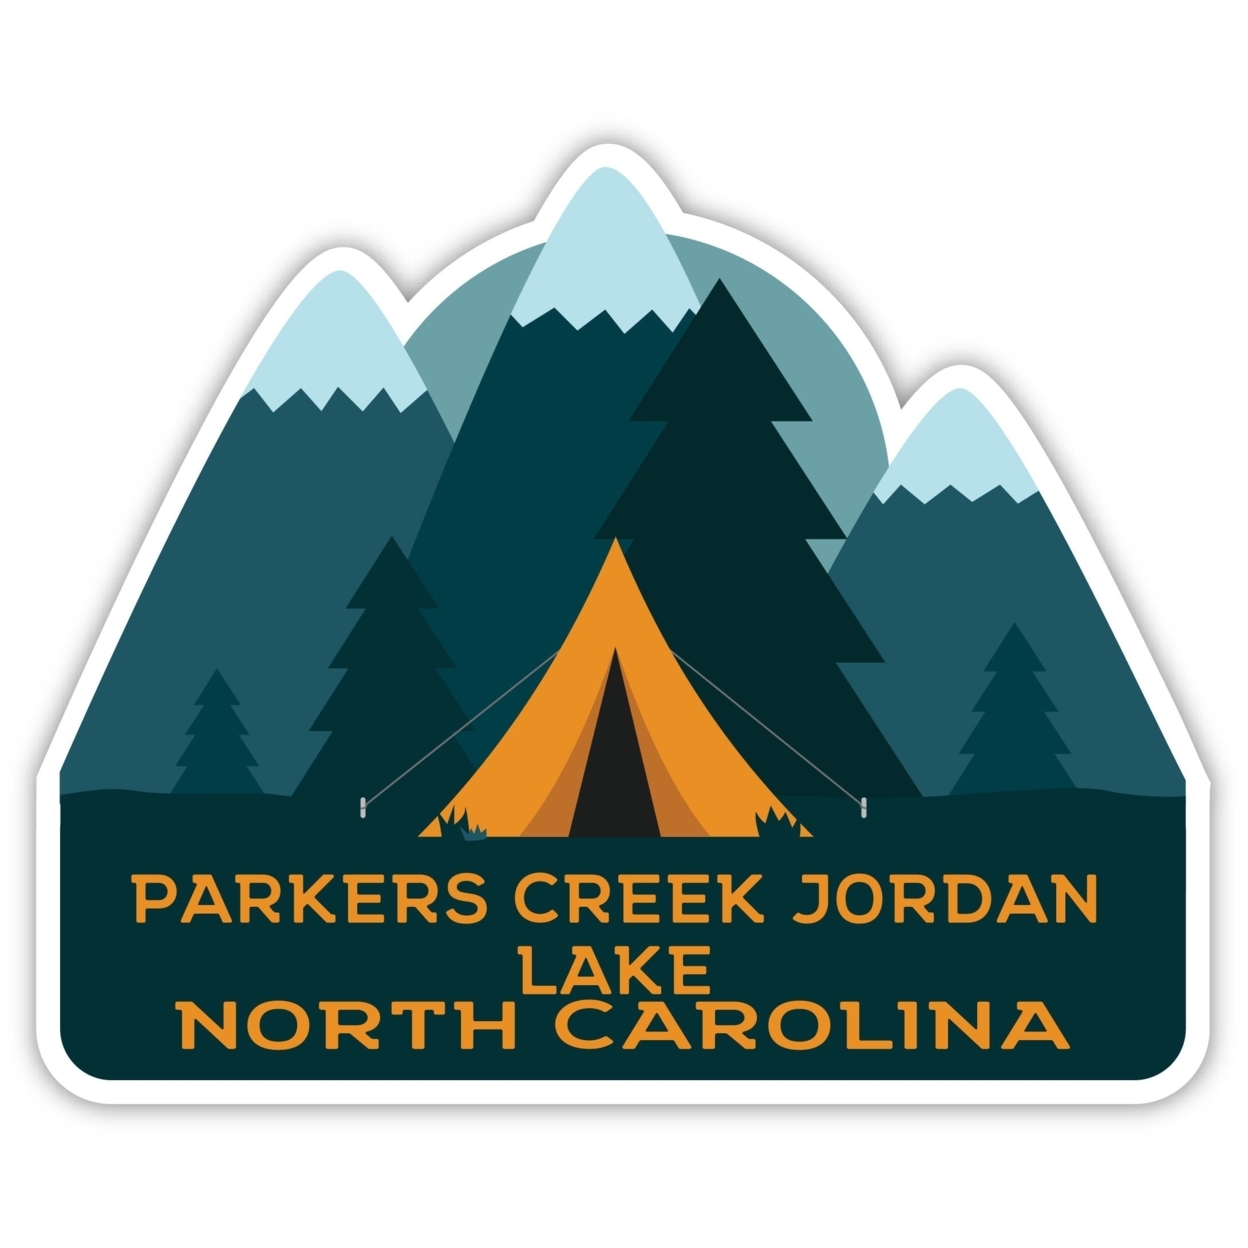 Parkers Creek Jordan Lake North Carolina Souvenir Decorative Stickers (Choose Theme And Size) - Single Unit, 4-Inch, Tent